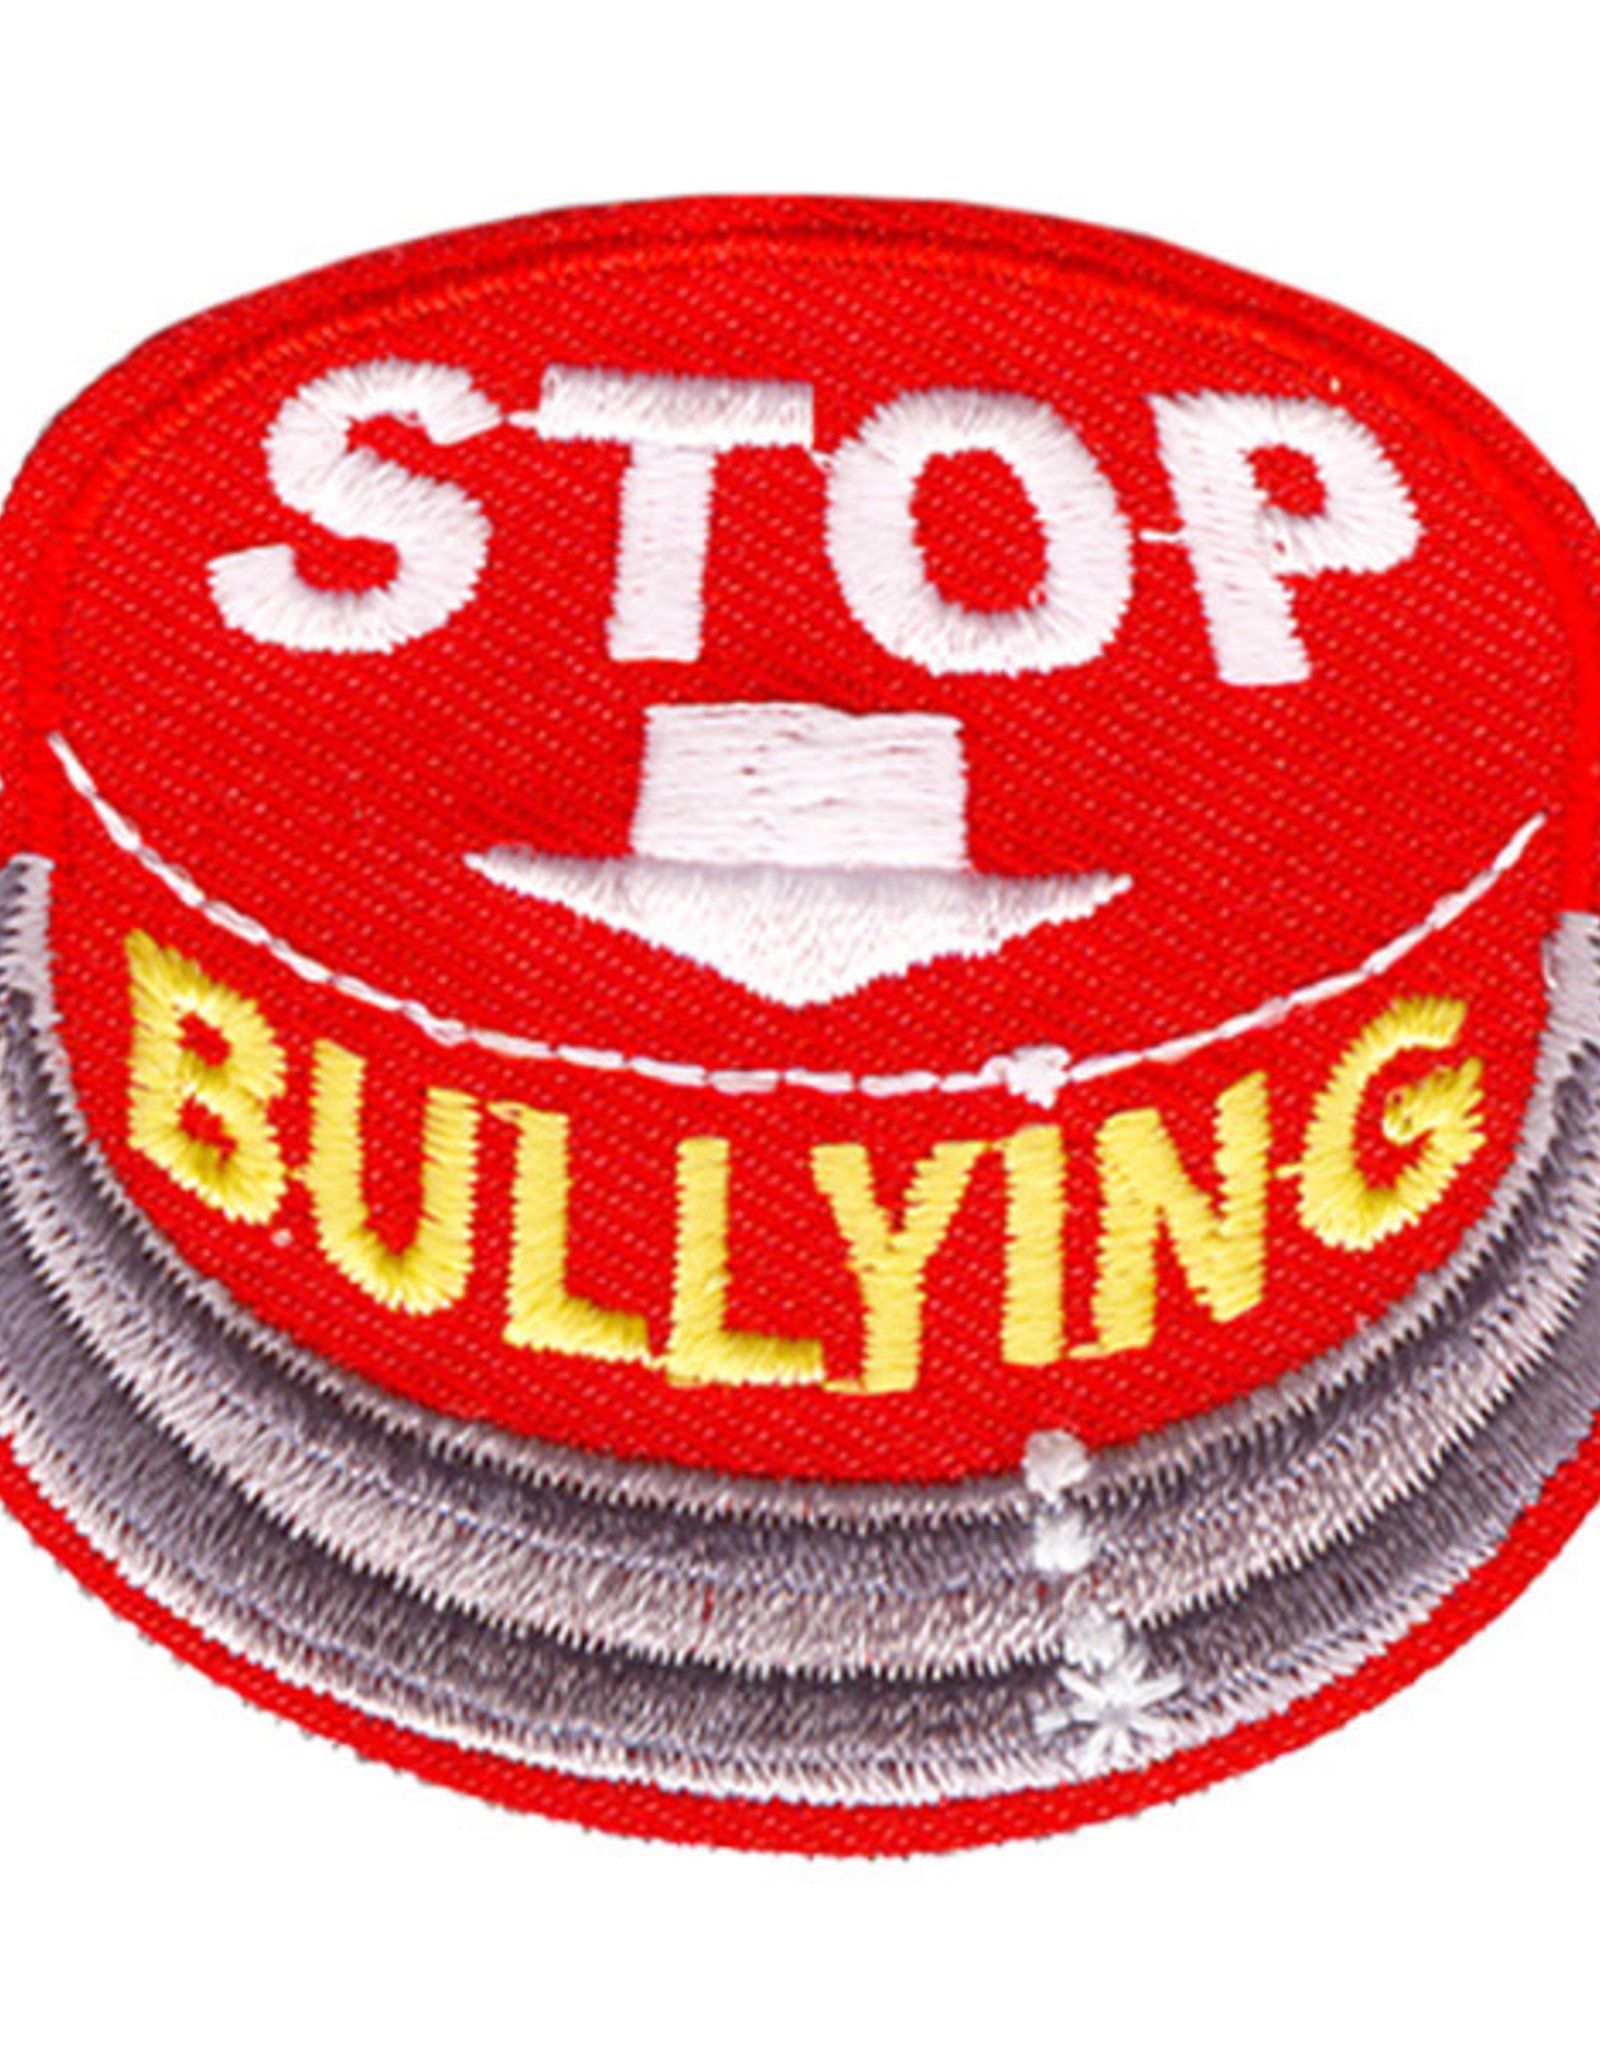 Advantage Emblem & Screen Prnt Stop Bullying Red Button Fun Patch